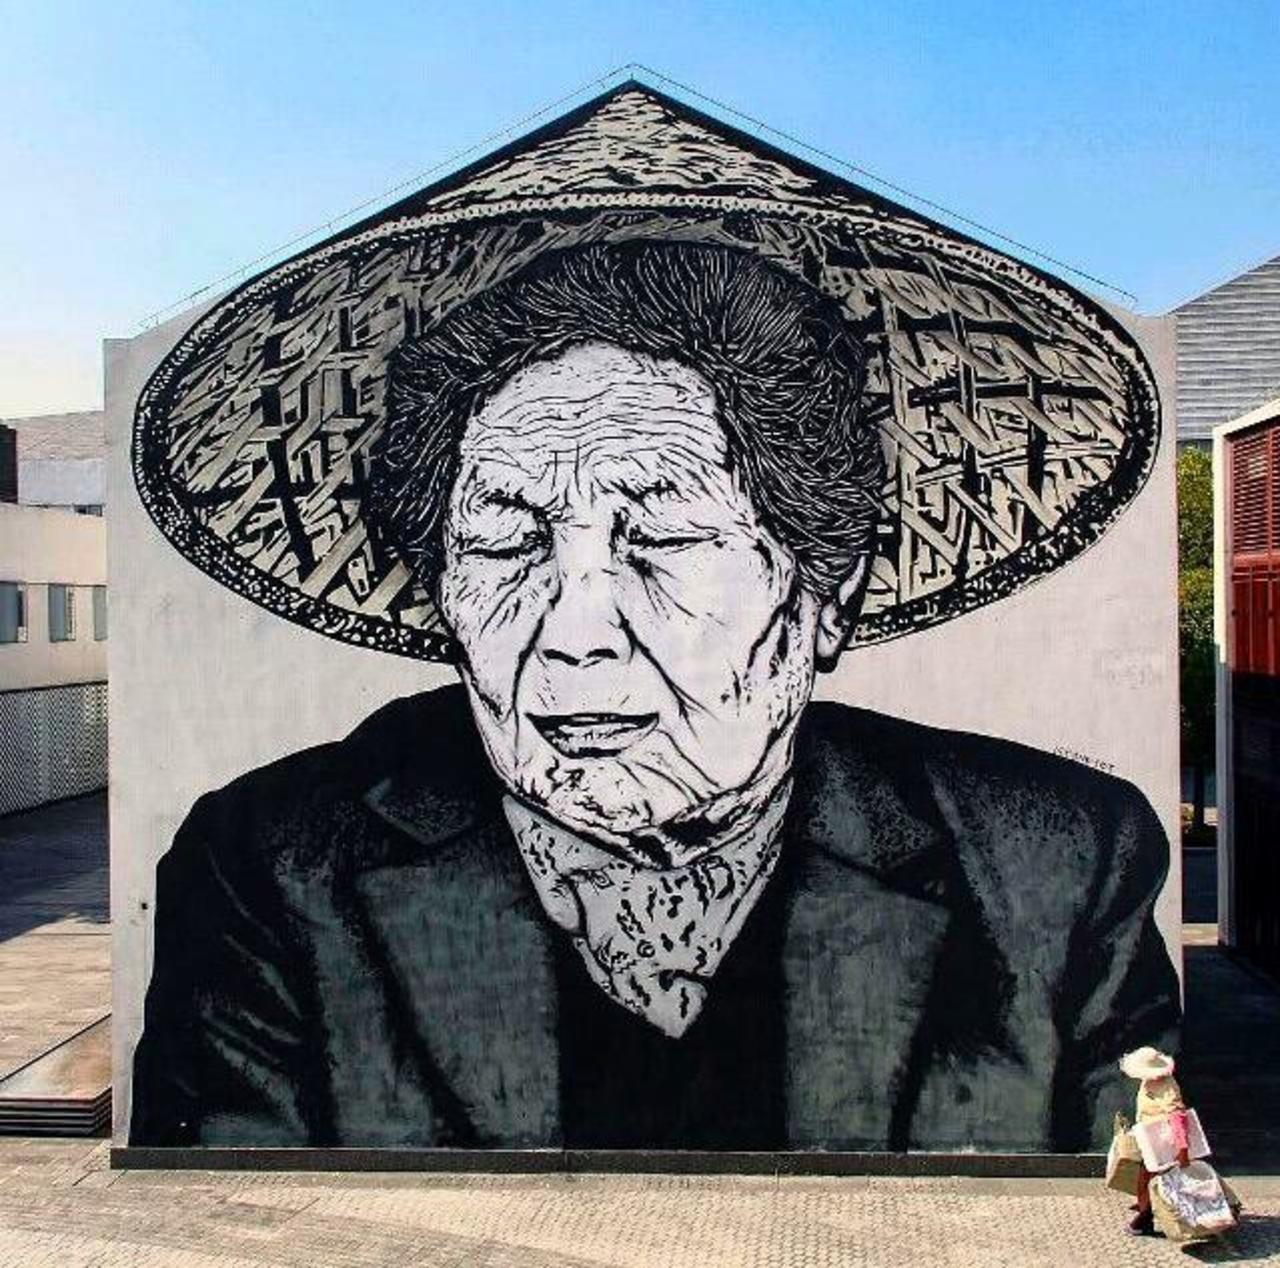 RT @bkedc: New Street Art by icy&sot in Shanghai  

#art #graffiti #mural #streetart http://t.co/J0srRIgq7N